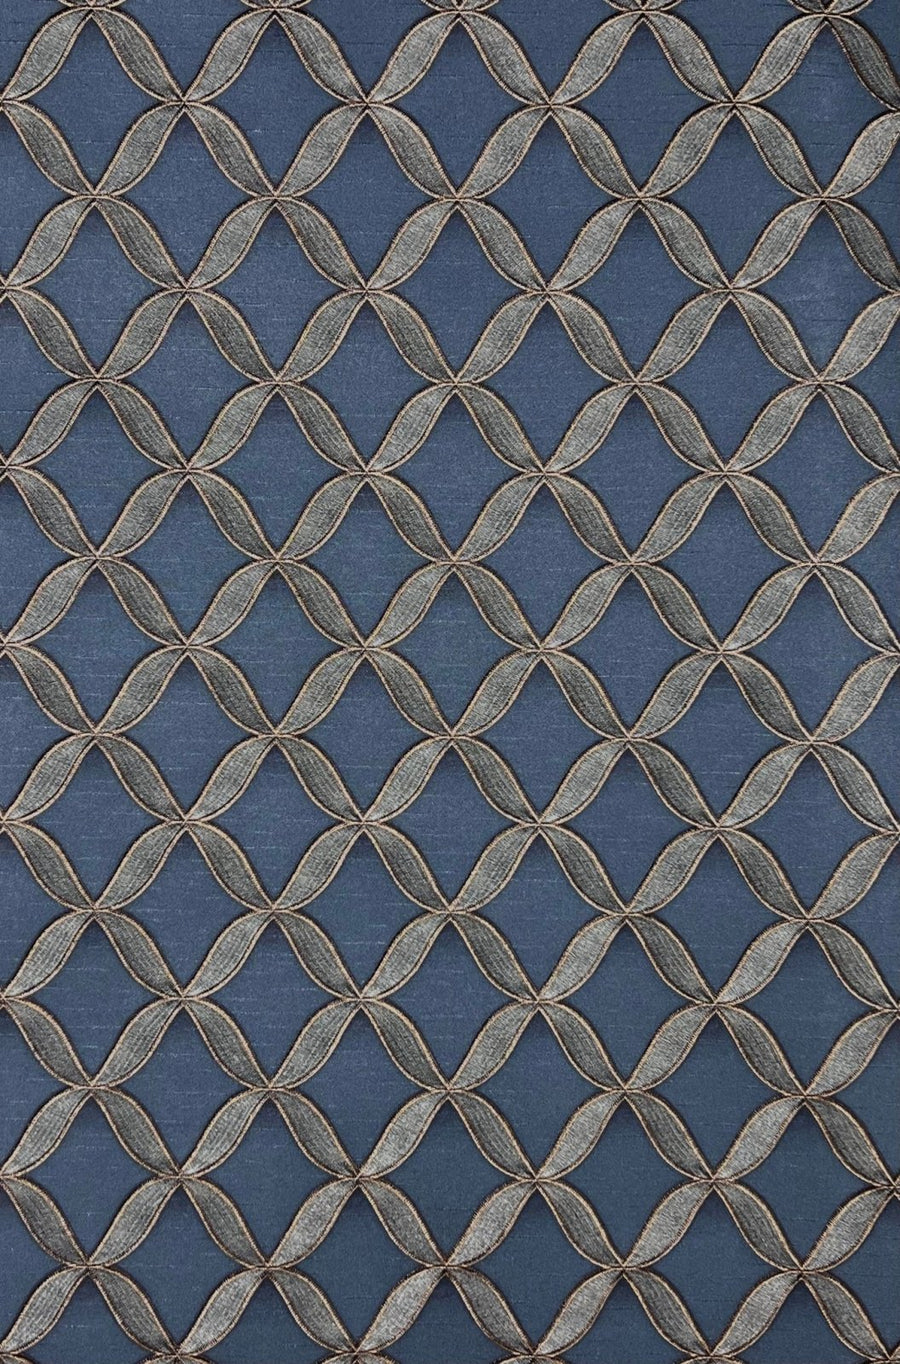 FT221227-Decor Warehouse-Fabric Touch Navy Geometric Trellis Wallpaper-Decor Warehouse